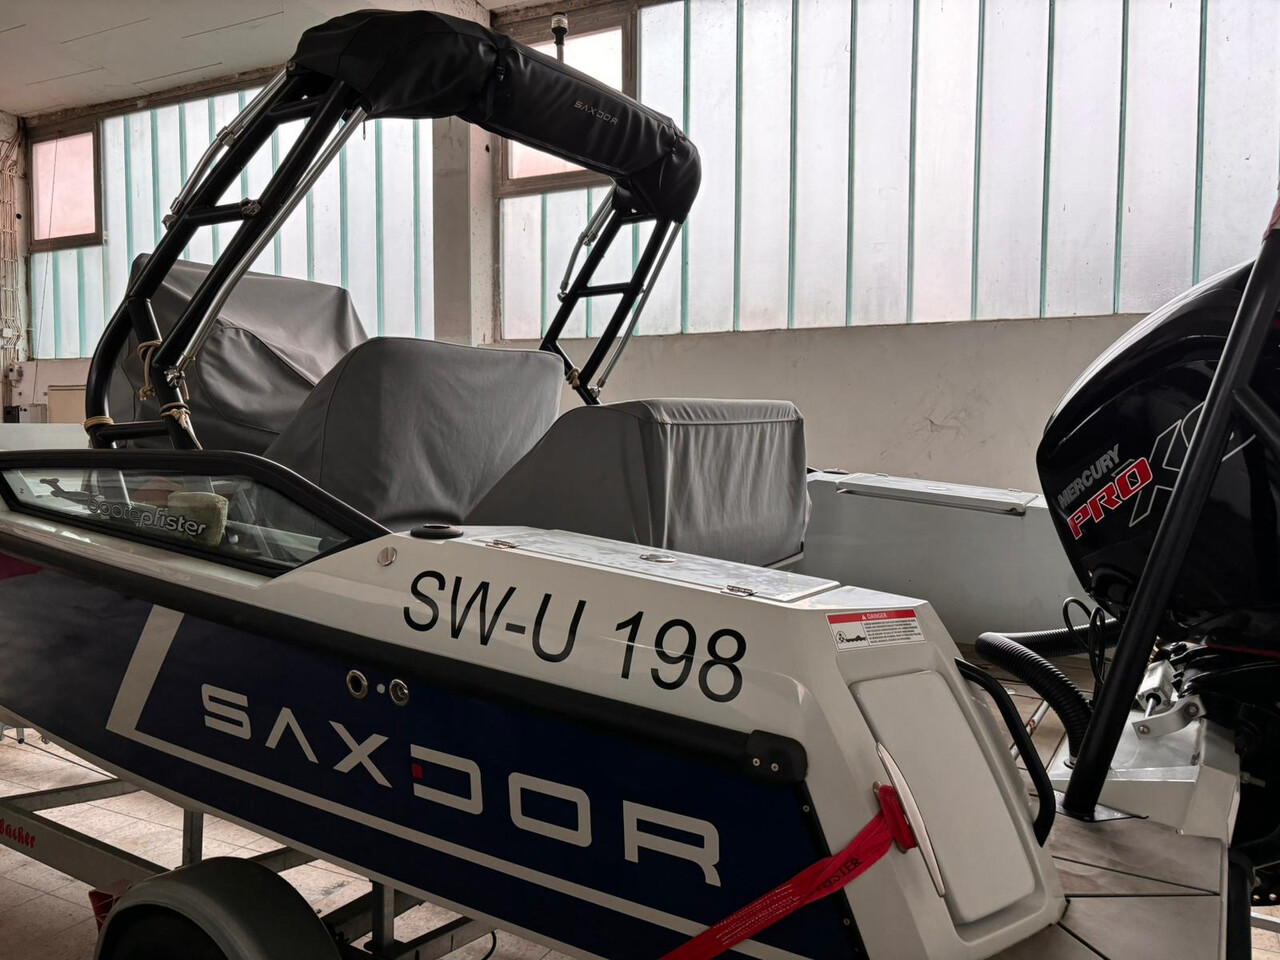 Saxdor 200 (Kommission) - imagem 3